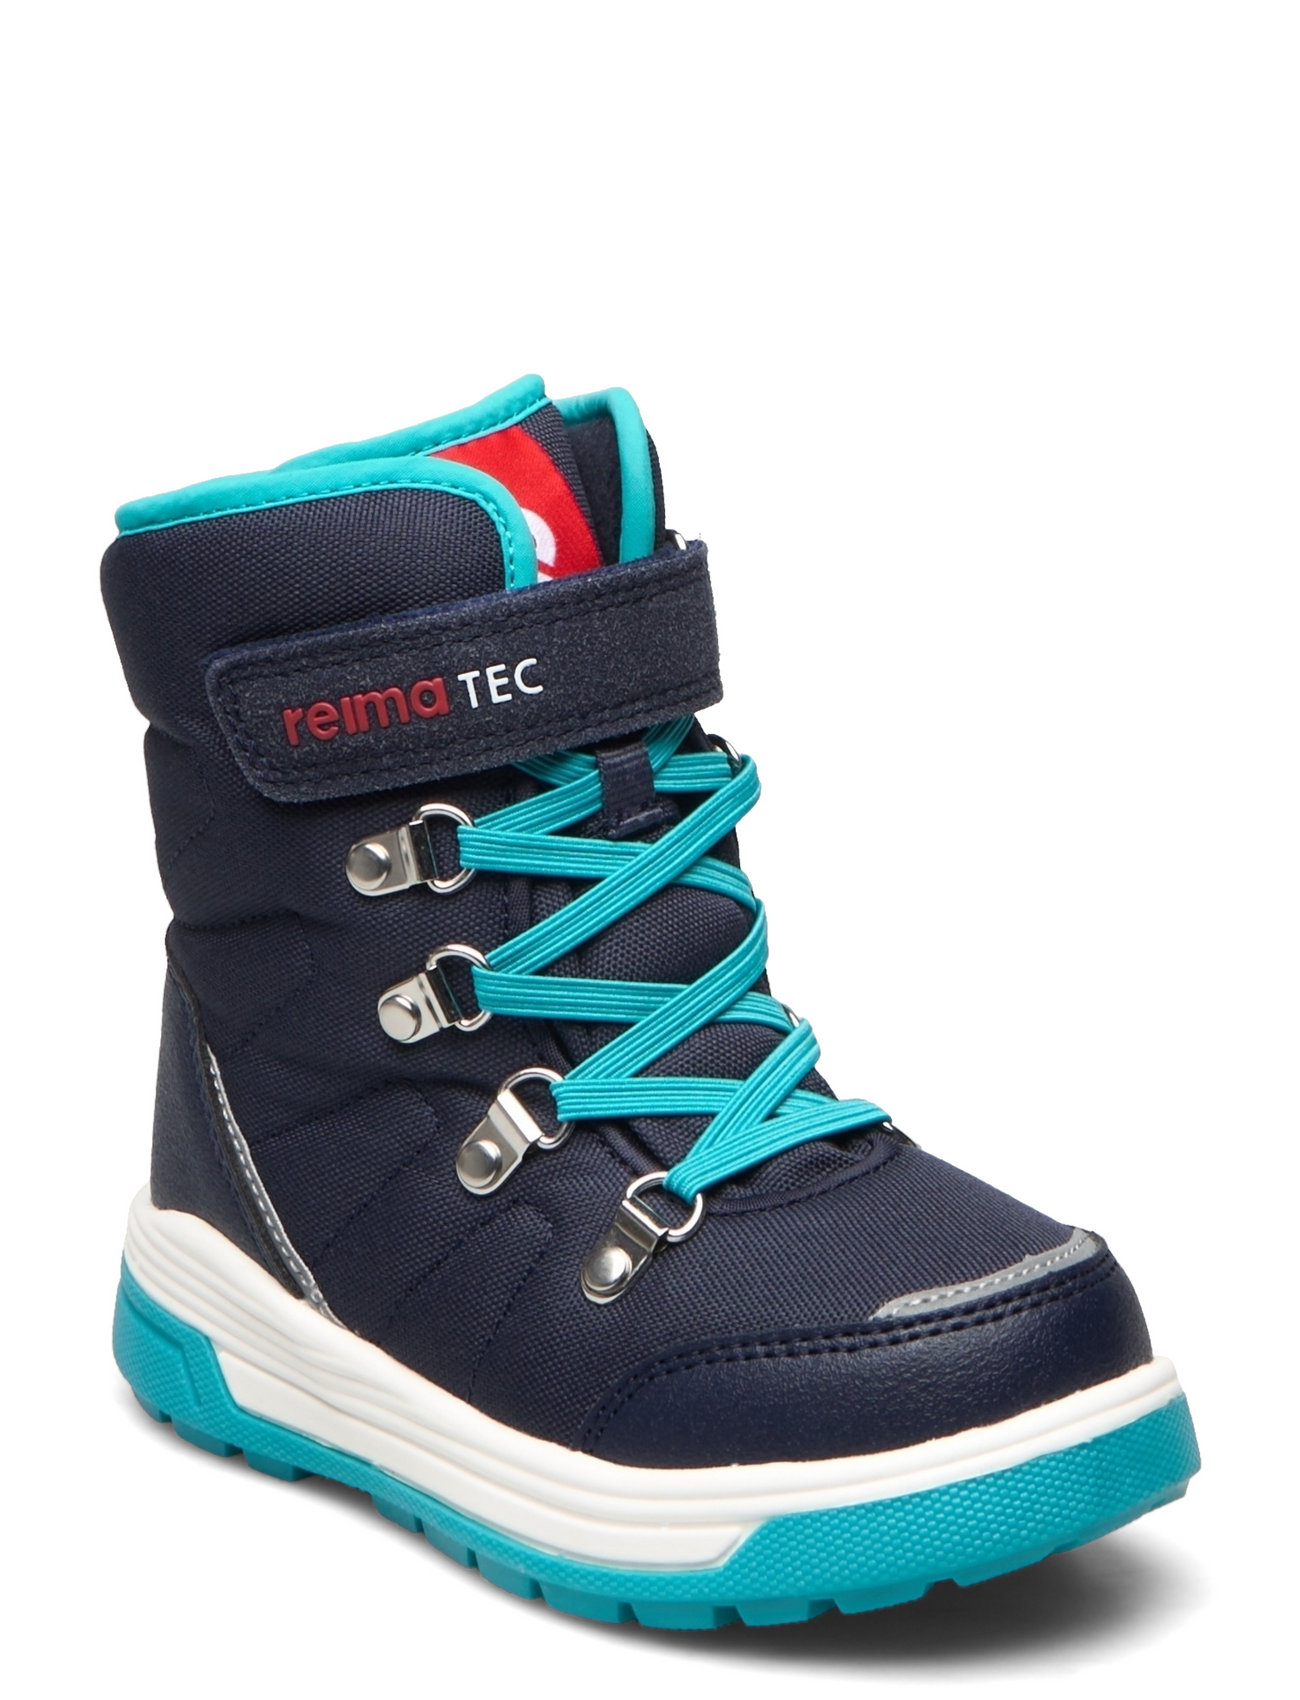 Reima Winter Shoes Quicker (Navy/Marineblå) 475 kr | Boozt.com